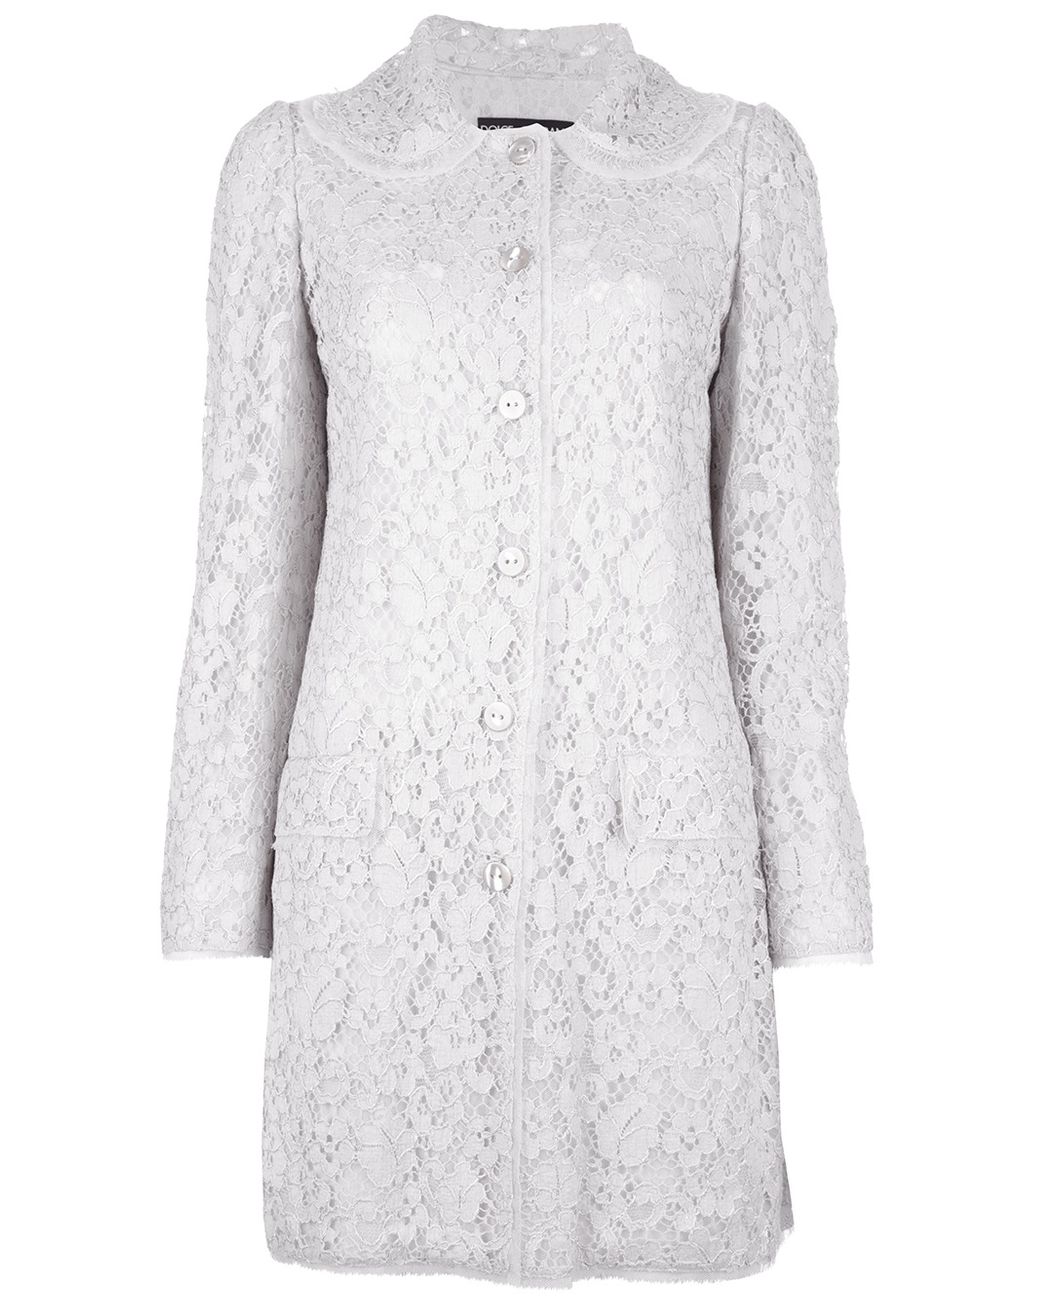 Dolce & Gabbana Lace Dress Coat in White | Lyst